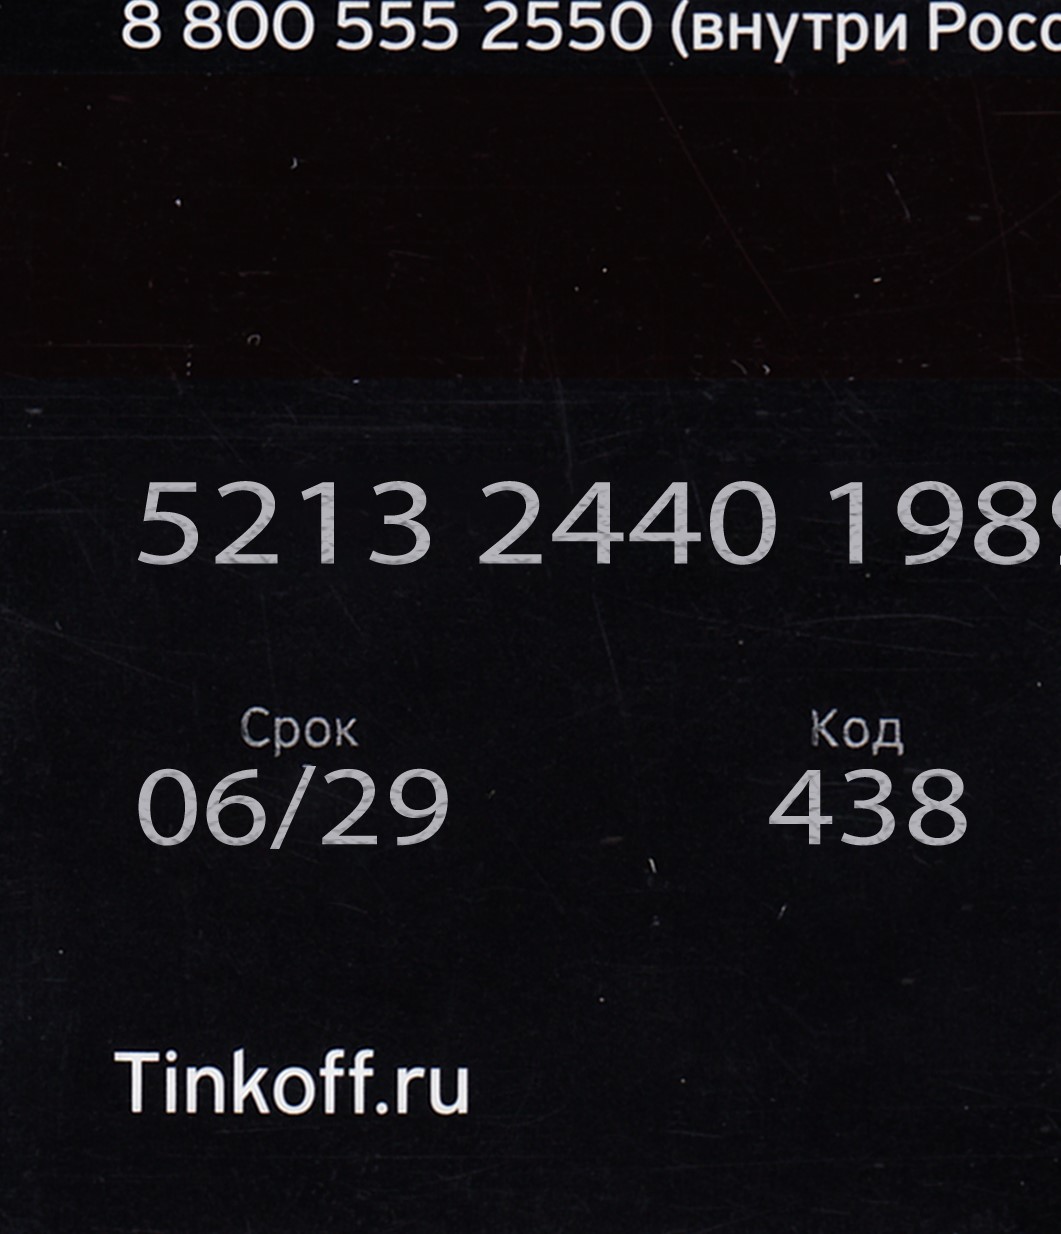 Russia Credit Card-3